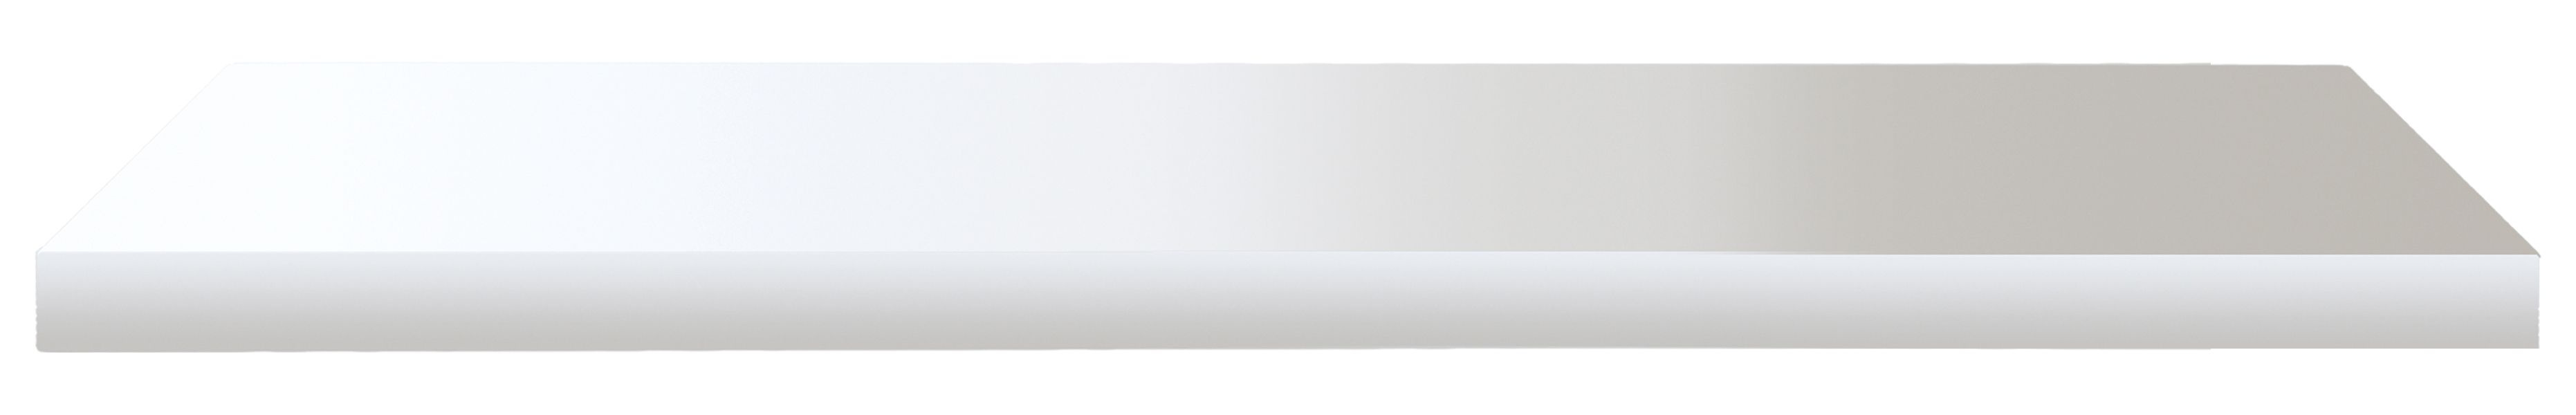 Image of Wickes Gloss White Radiator Shelf - 18 x 150 x 600mm